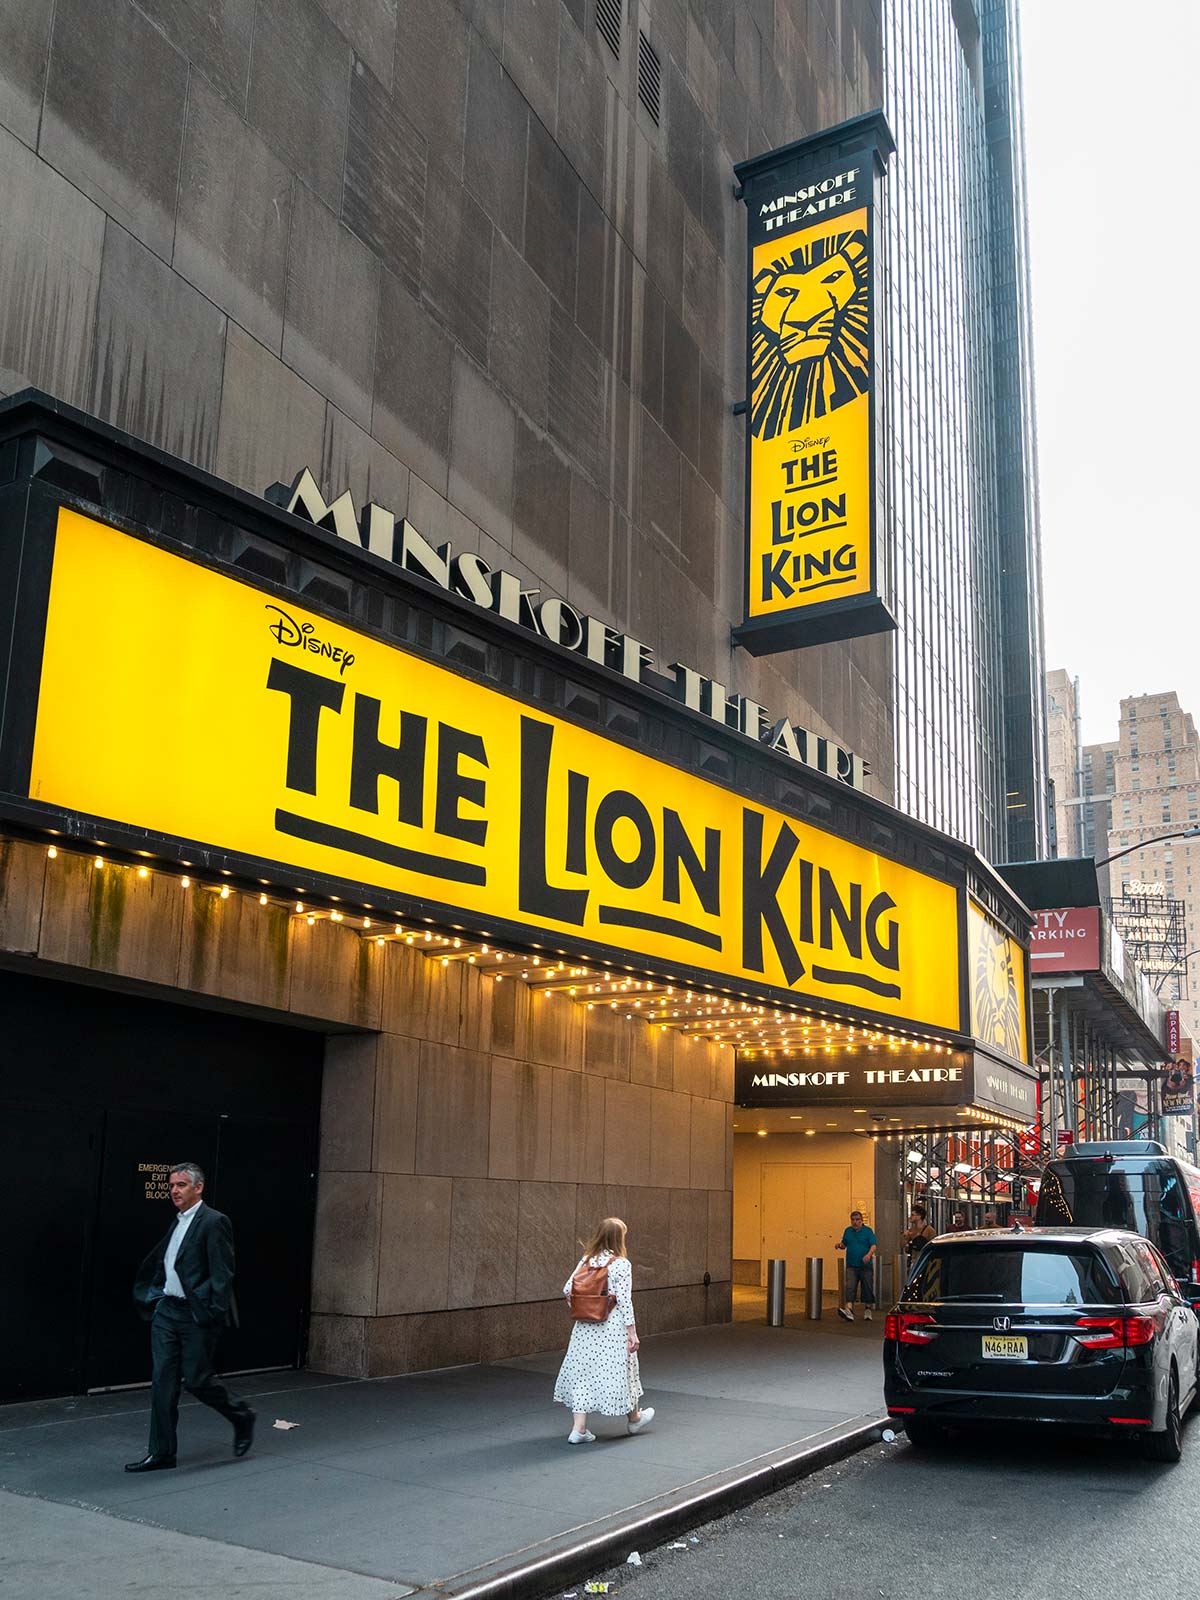 Le Roi Lion, Broadway New York, NY, États-Unis / The Lion King, Broadway Theater, New York, NYC, USA